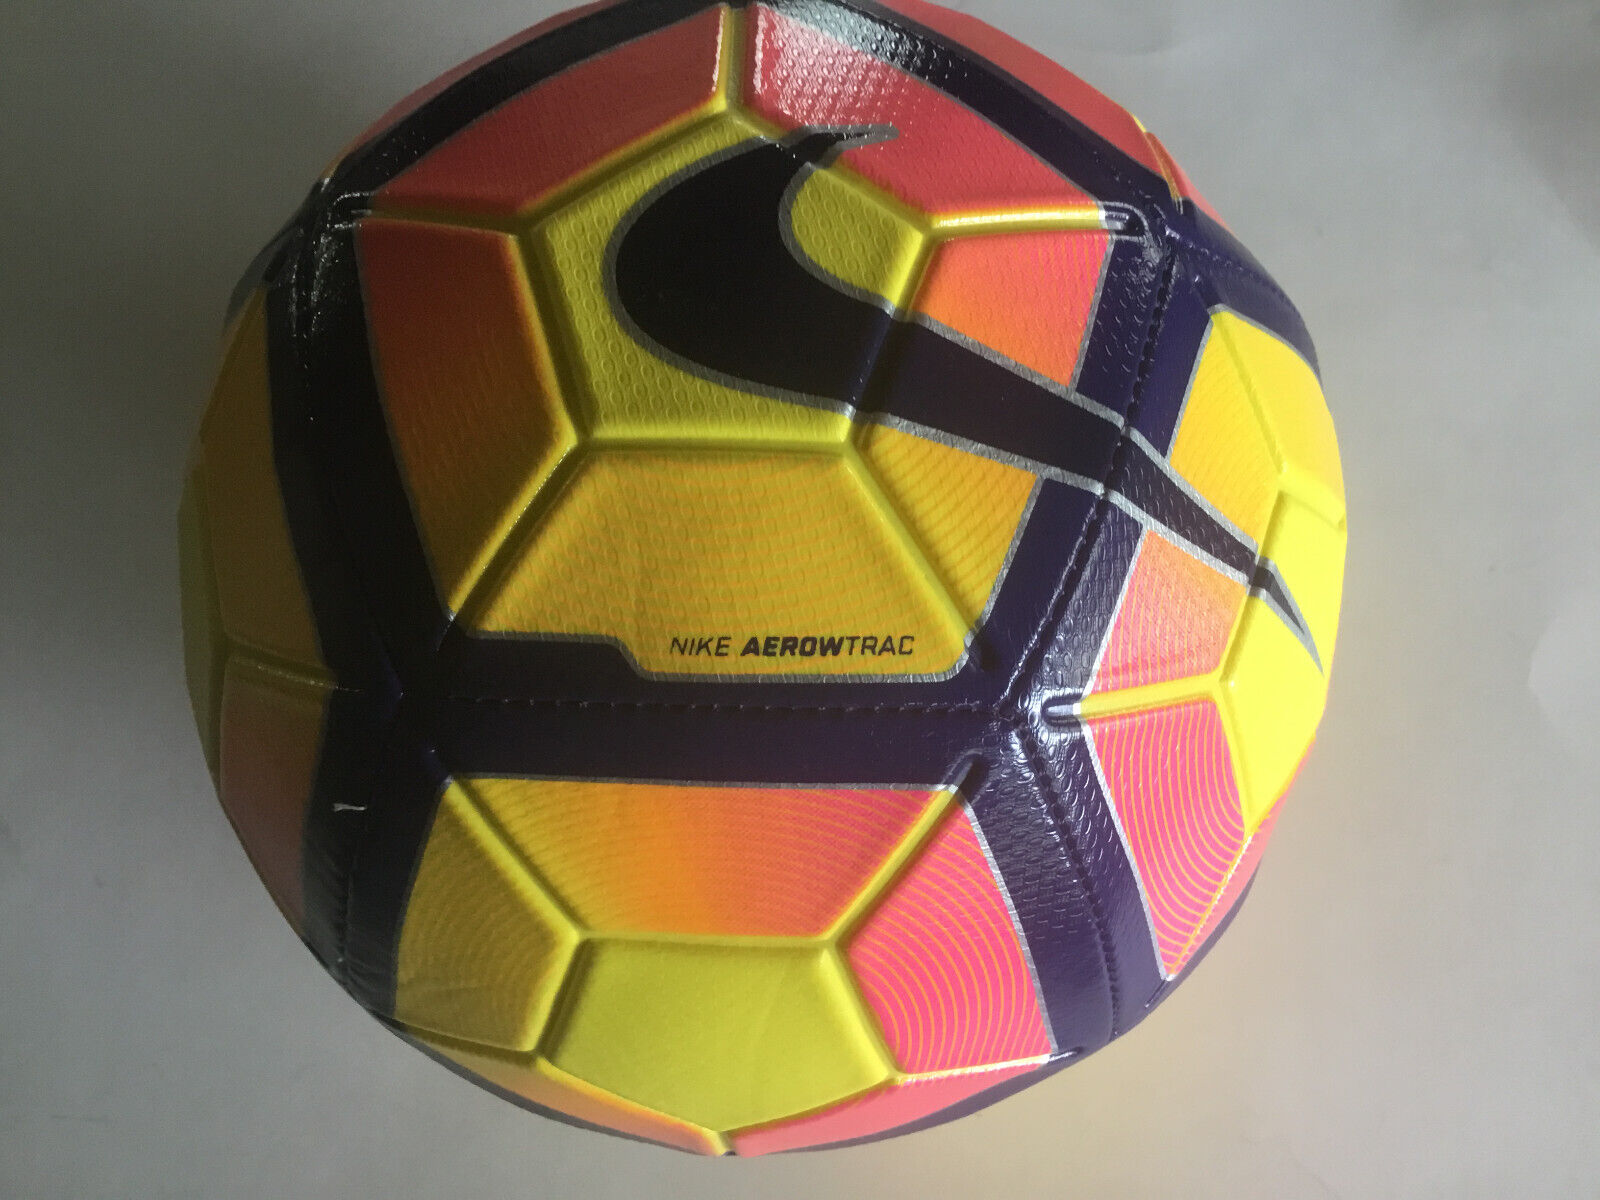 Vatio Si Fe ciega NIKE STRIKE AEROWTRAC Soccer Ball Size 5 Rare Hard To Find | eBay